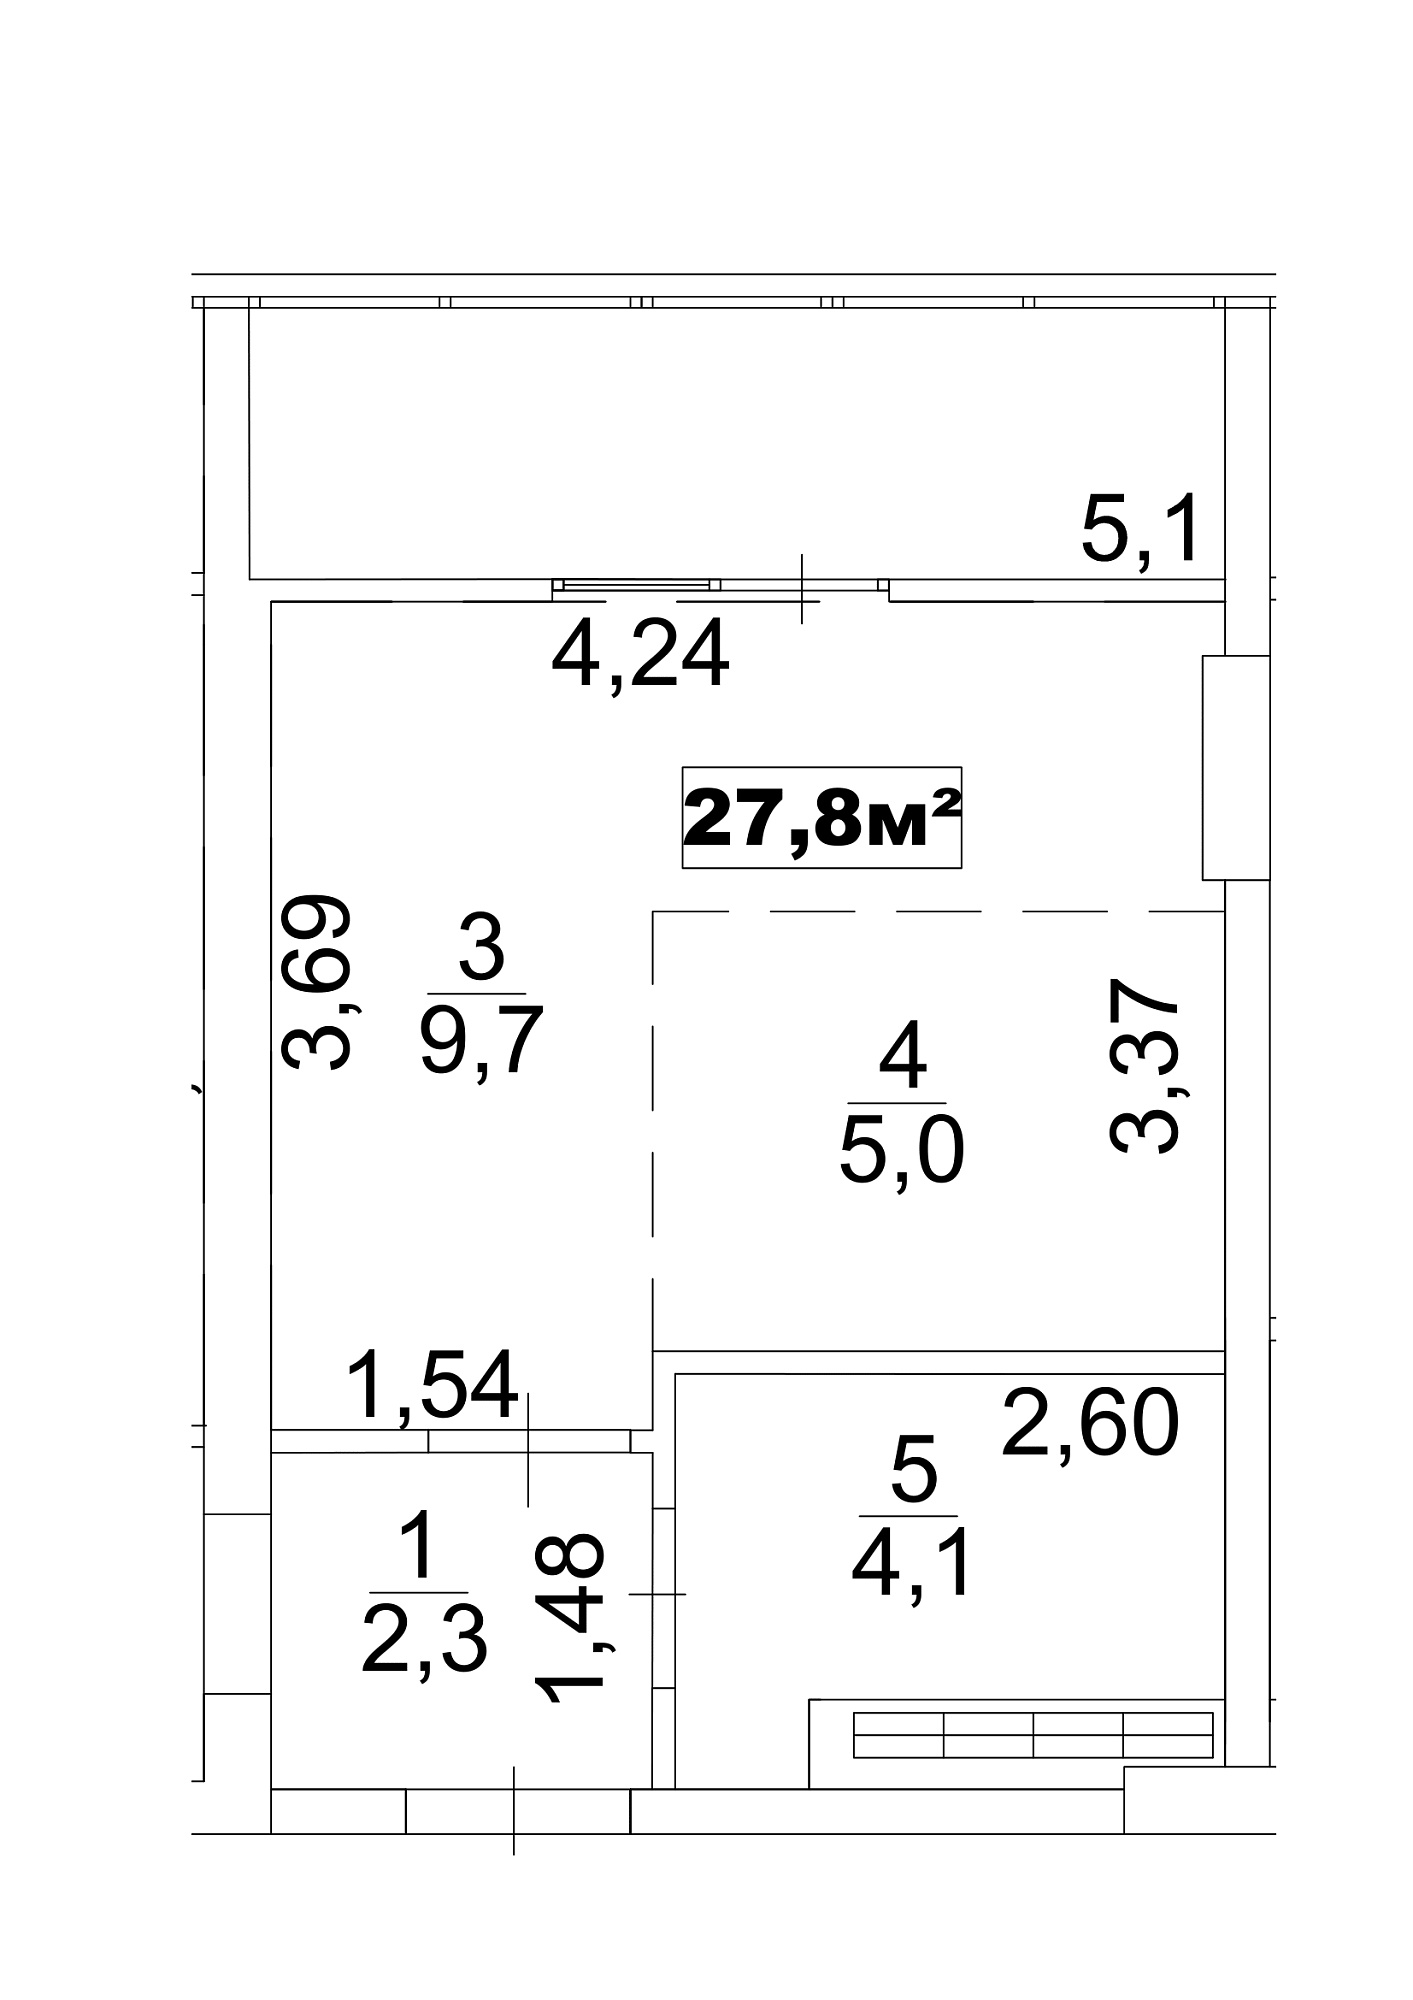 Planning Smart flats area 27.8m2, AB-13-03/0018в.